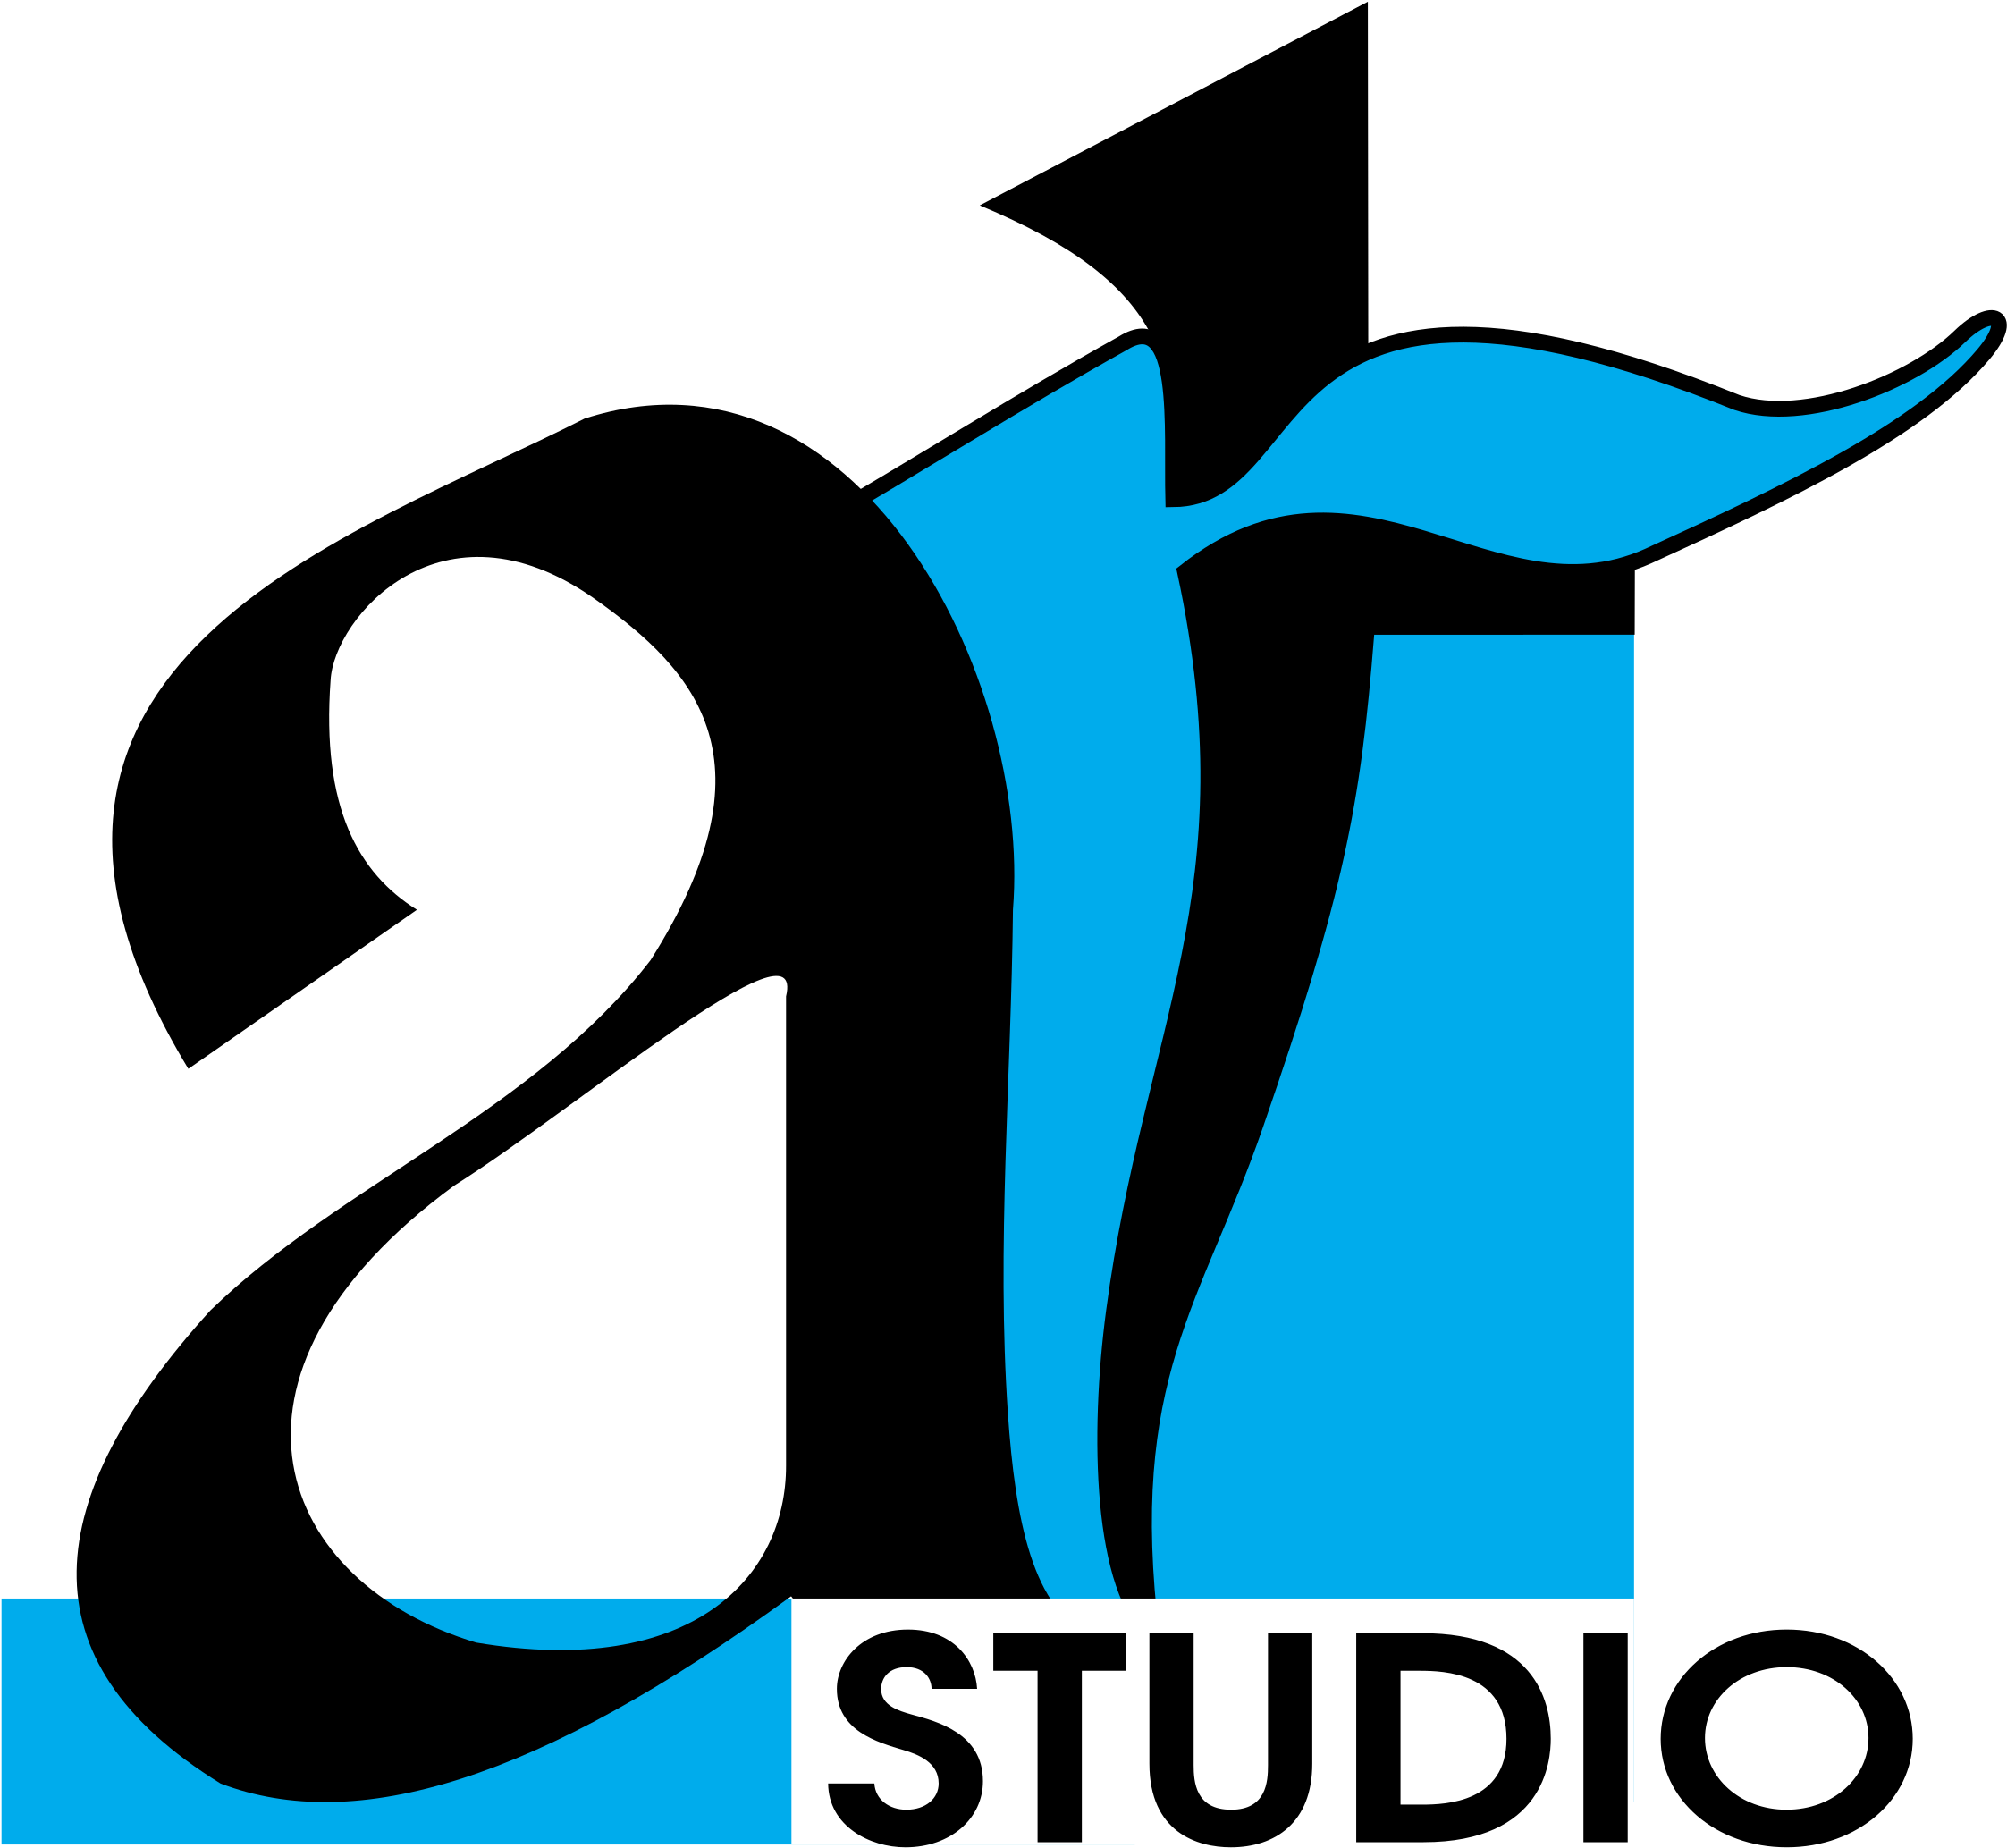 Studio logo png. Арт дизайн логотип. Логотипы Art studia. Art студия логотип. Логотип арт дизайнера.